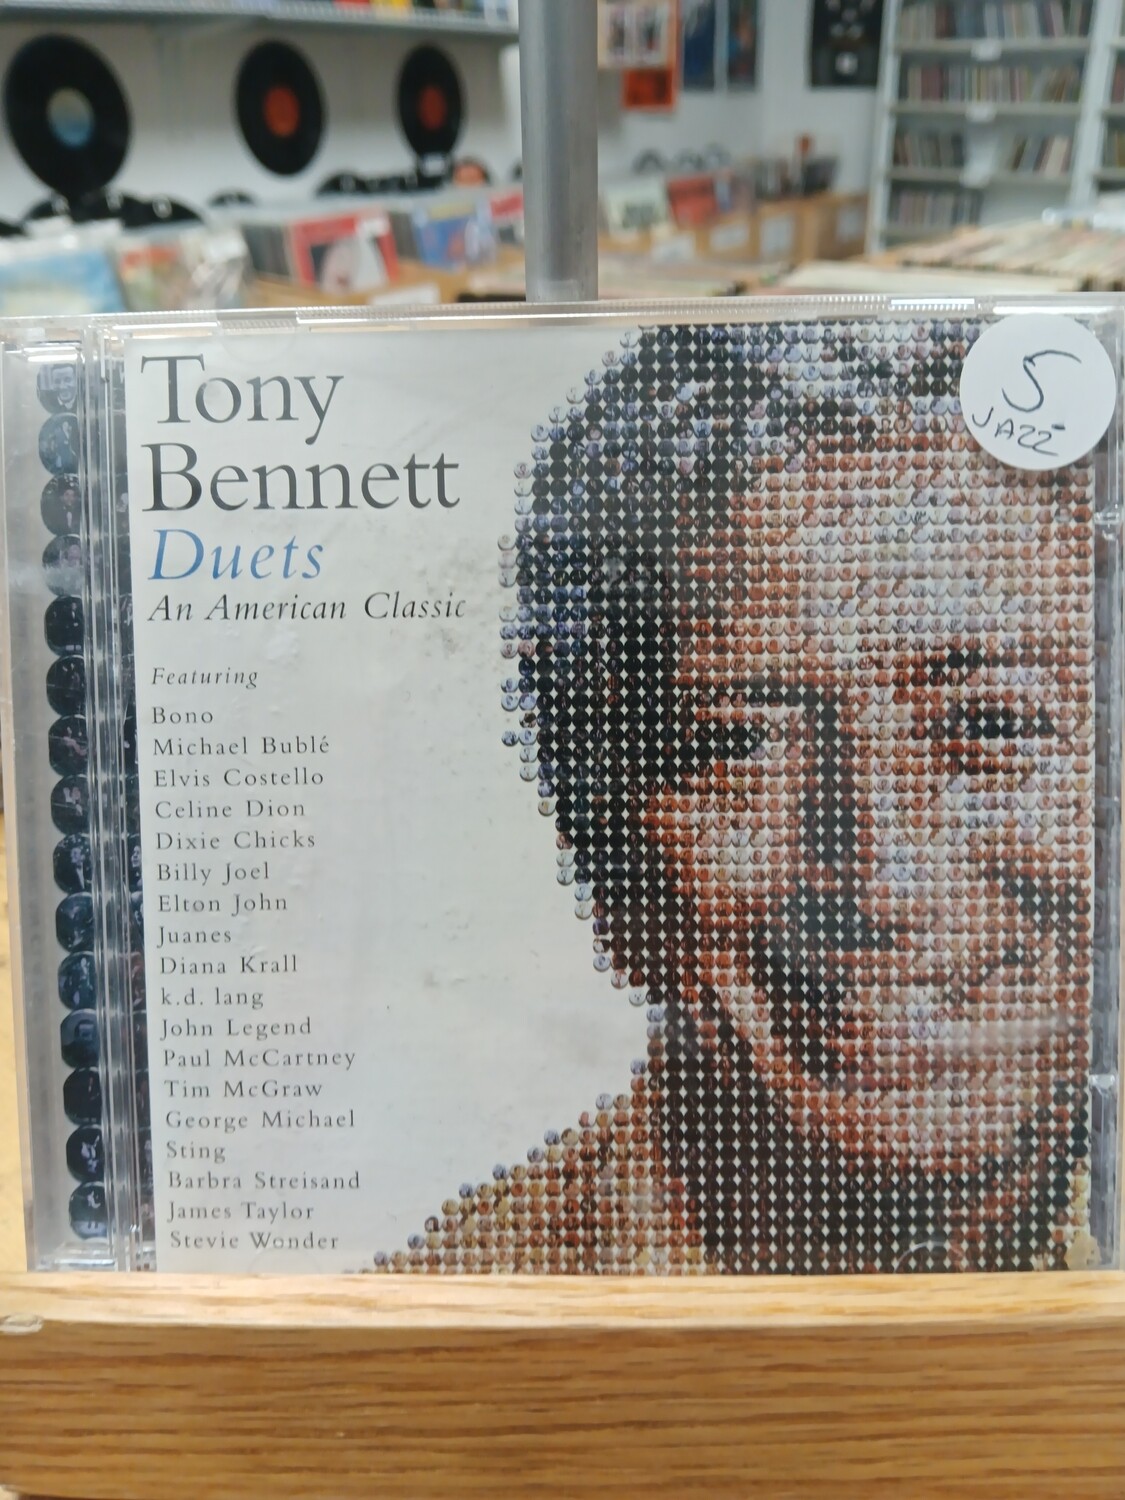 TONY BENNETT - Duets (CD)